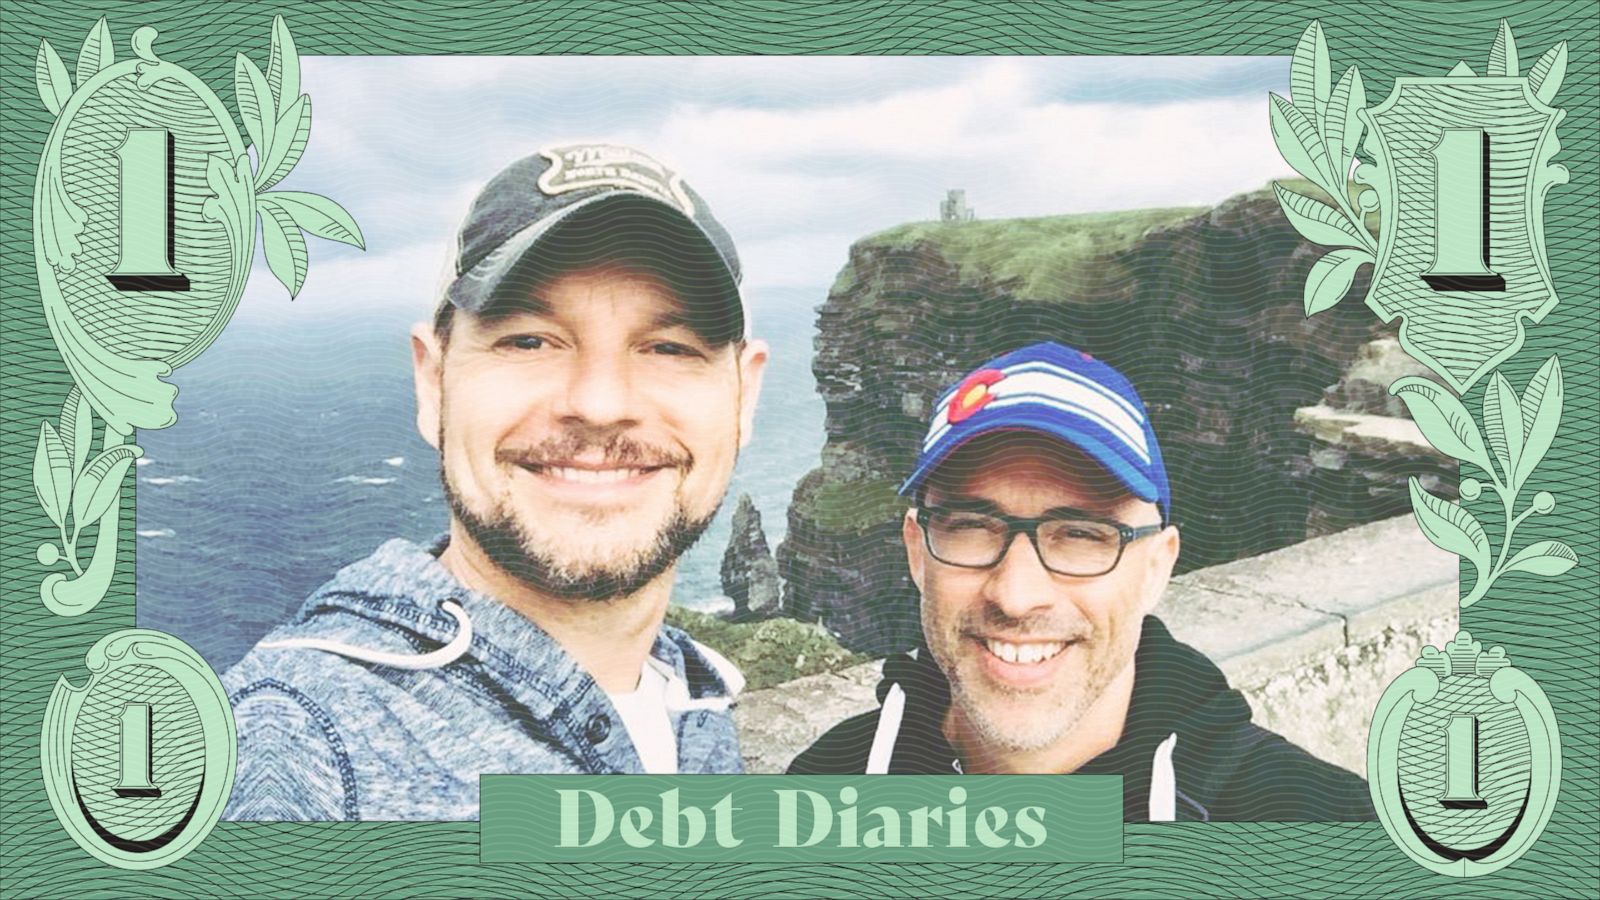 PHOTO: Debt Diaries